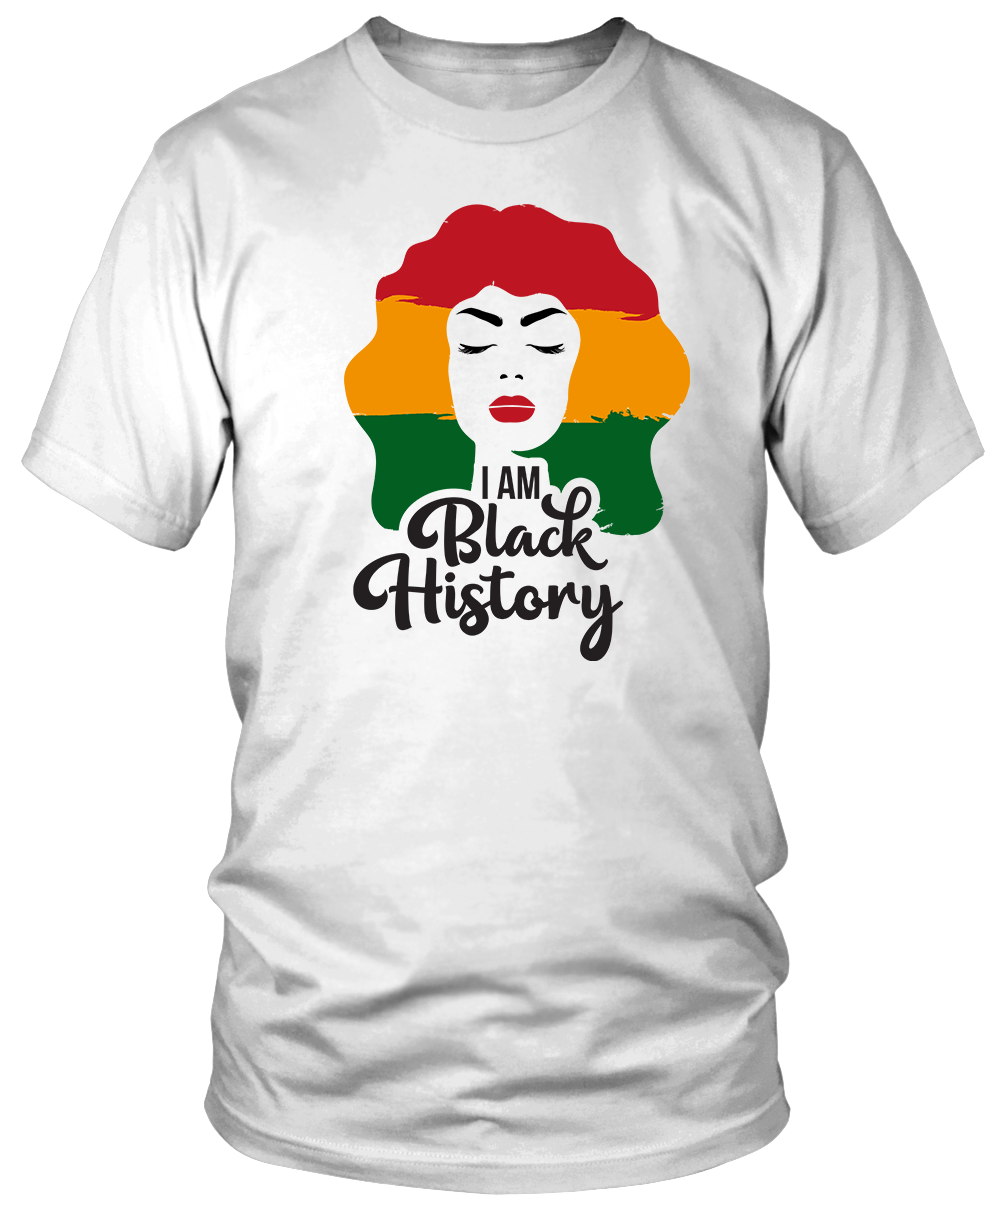 I AM BLACK HISTORY (Woman's Face)